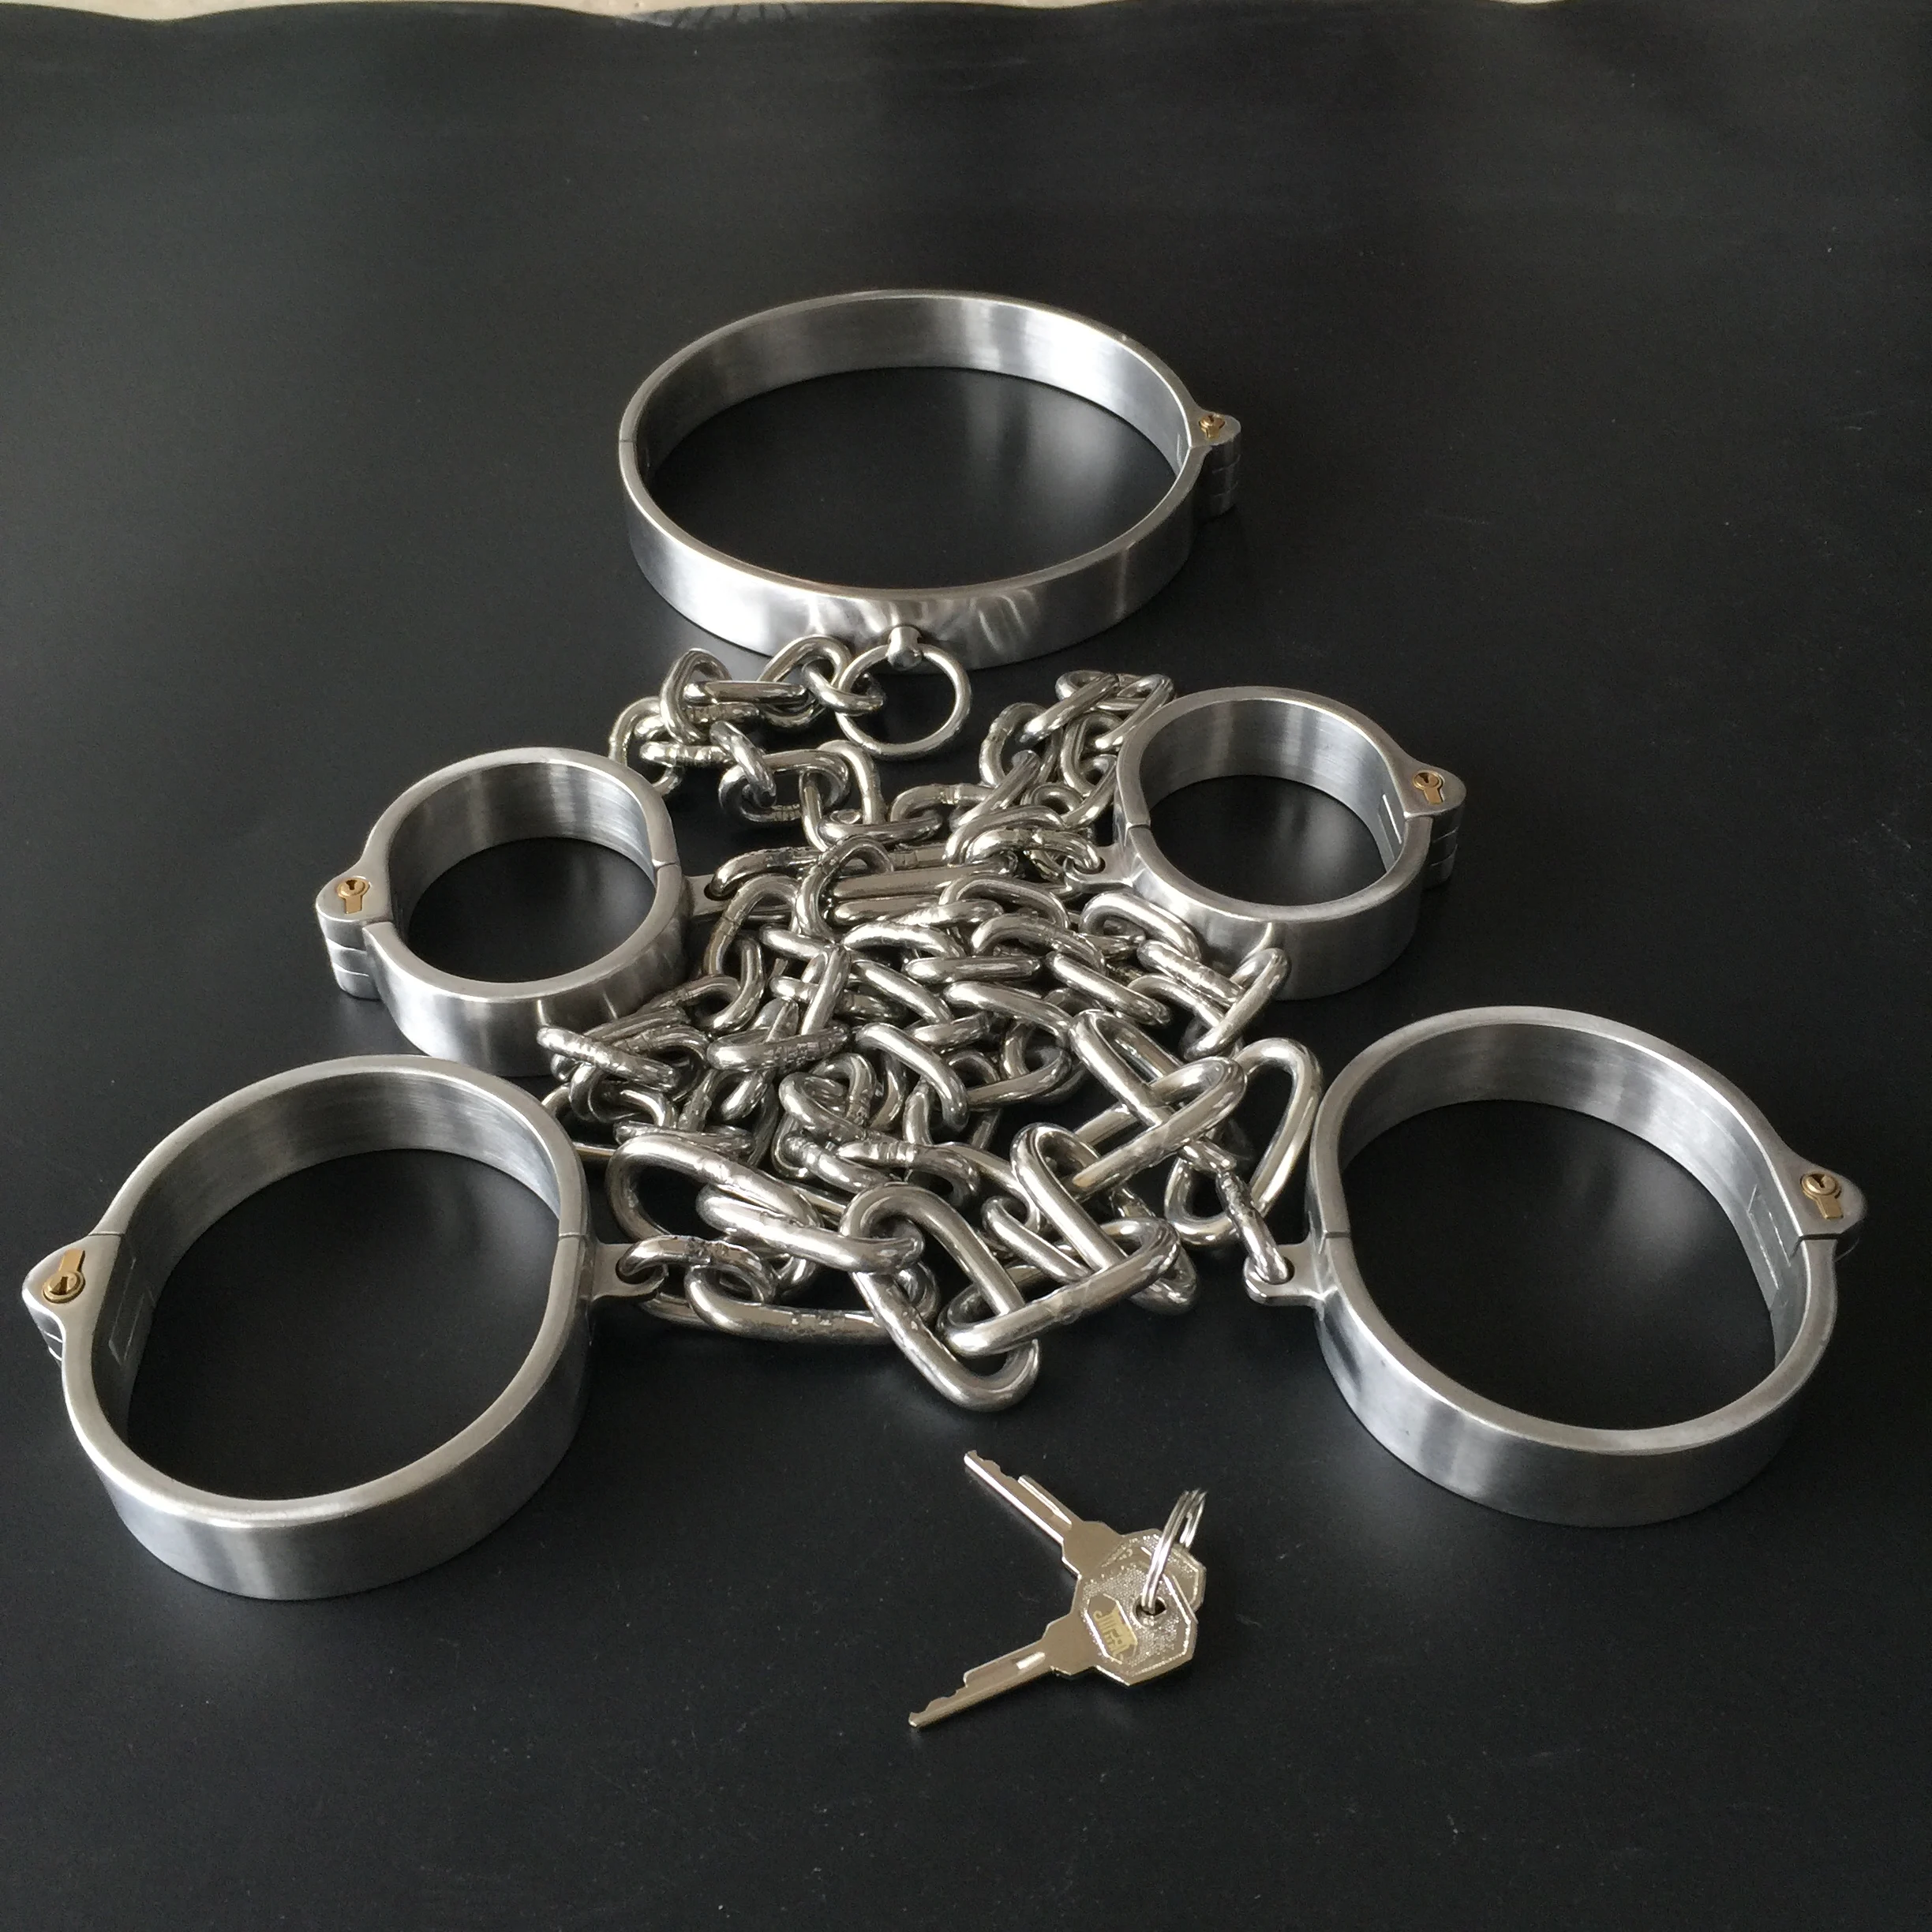 Stainless Steel Bdsm Cuffs Bondage Kit Collar Sex Handcuffs For Sex